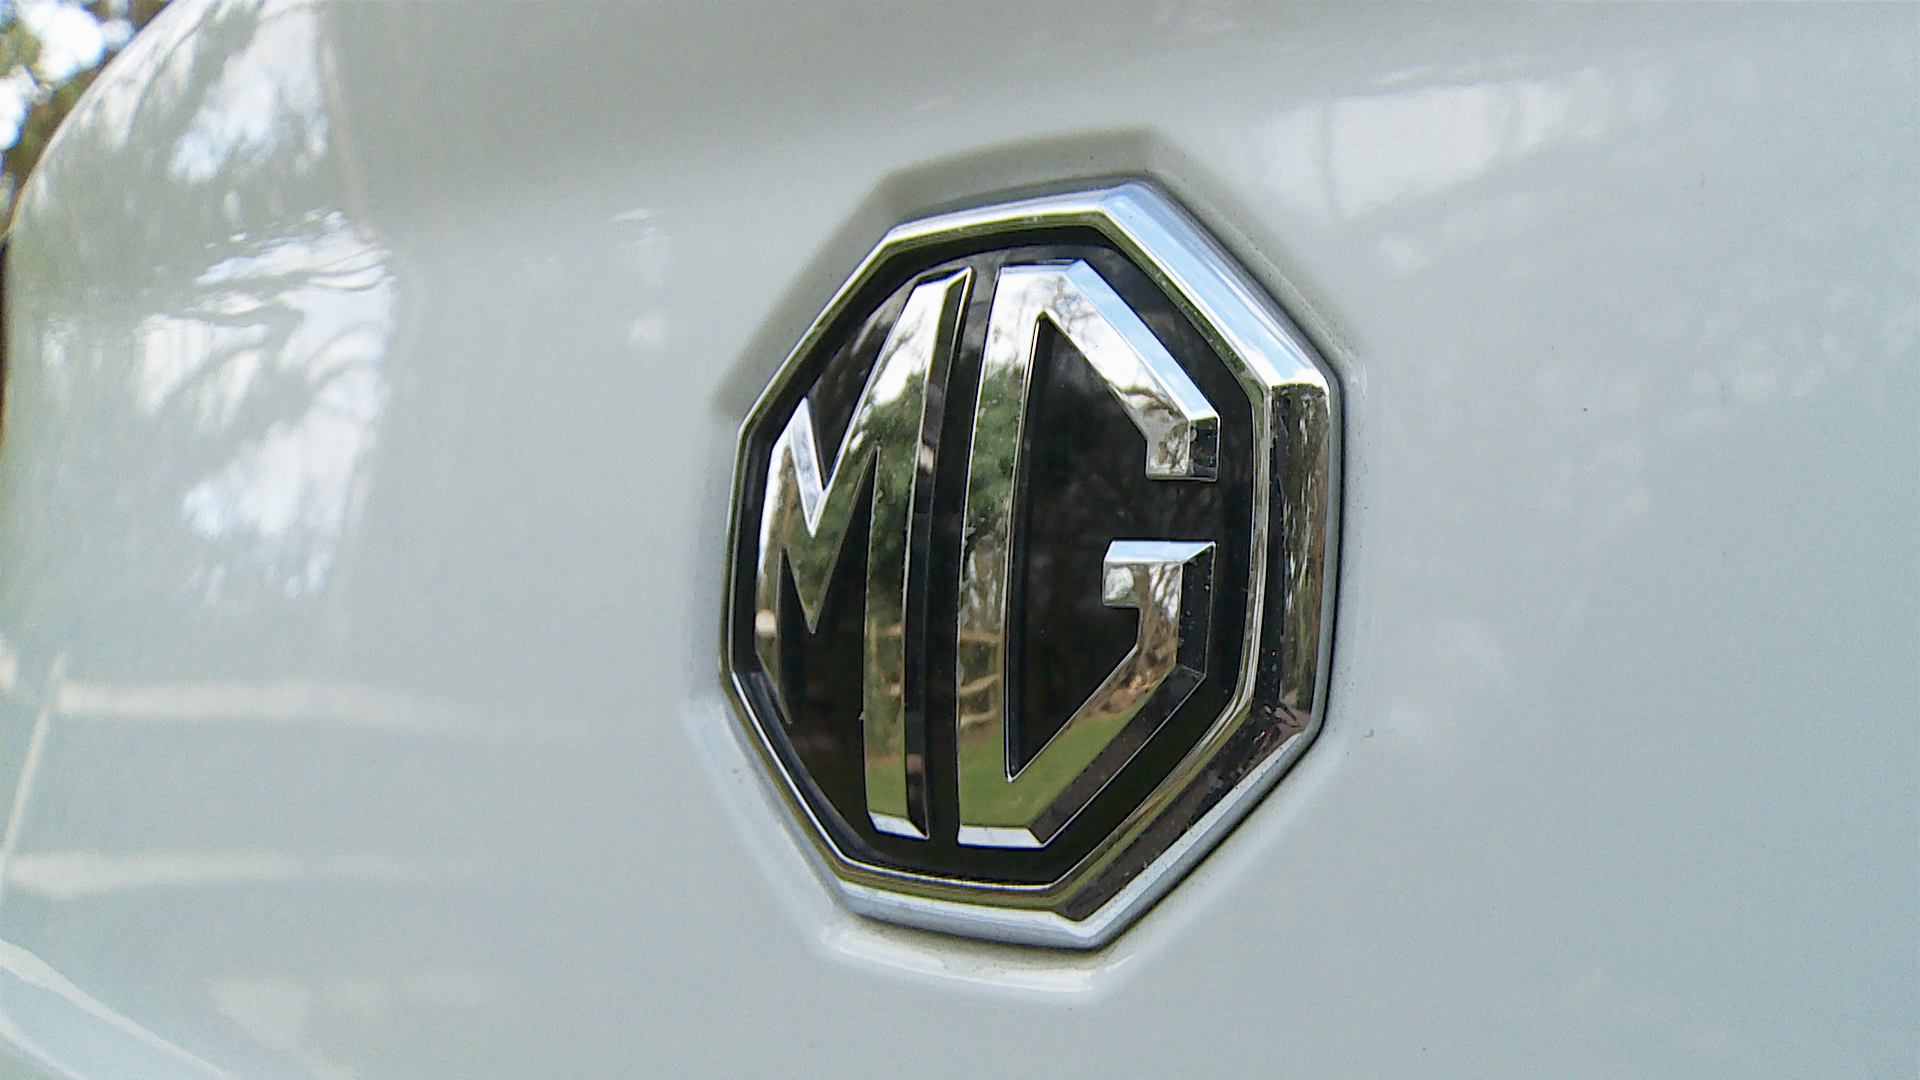 MG MOTOR UK MG3 HATCHBACK 1.5 VTi-TECH Exclusive 5dr [Navigation]